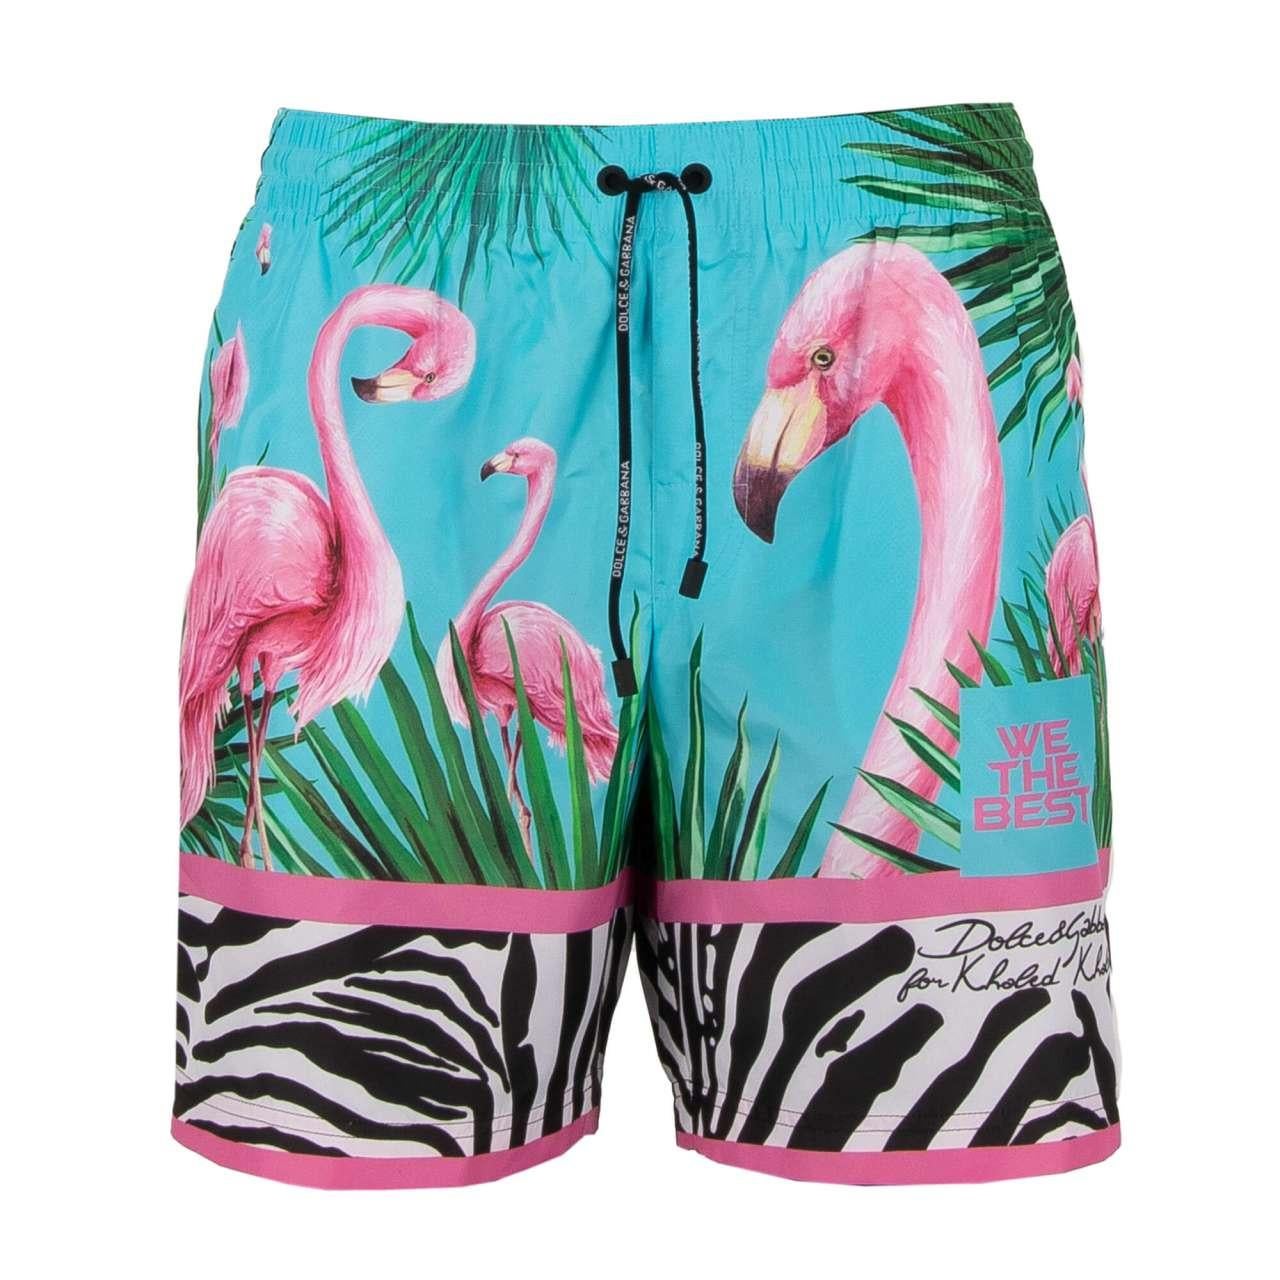 D&G - DJ Khaled Beachwear Swim Shorts with Flamingo Print Pink Blue S In Excellent Condition For Sale In Erkrath, DE